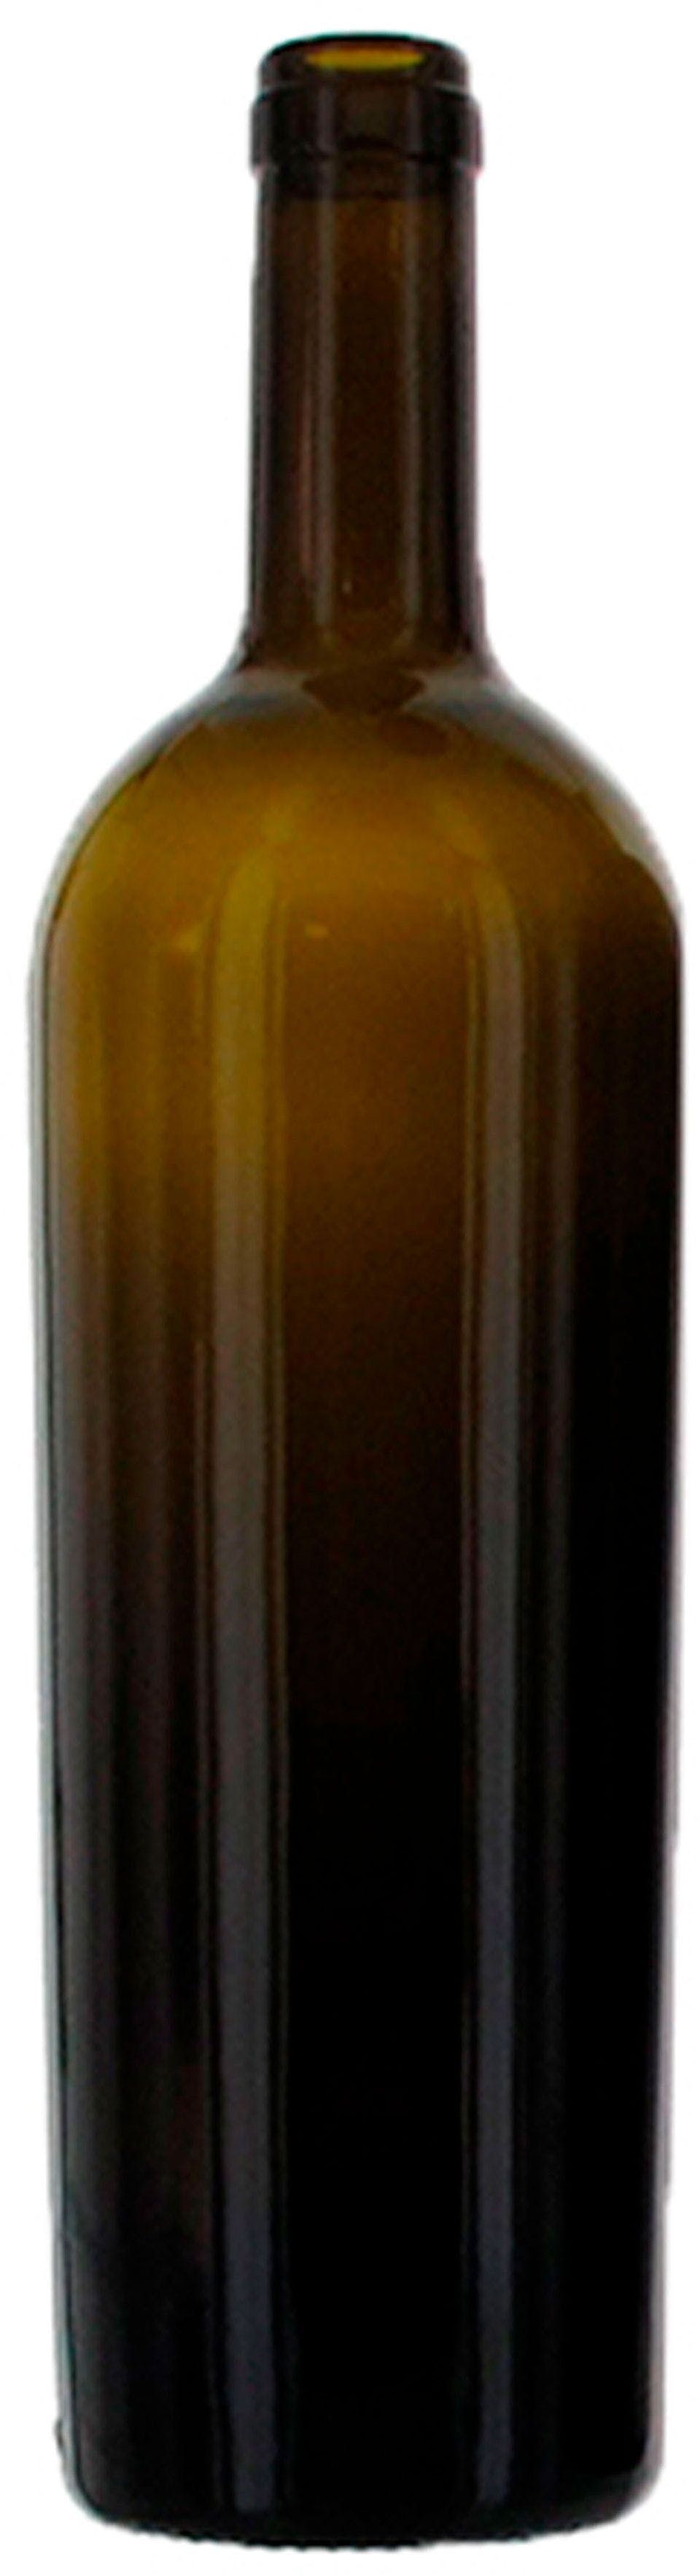 Flasche Bordeaux   VENUS 750 ml BG-Korken